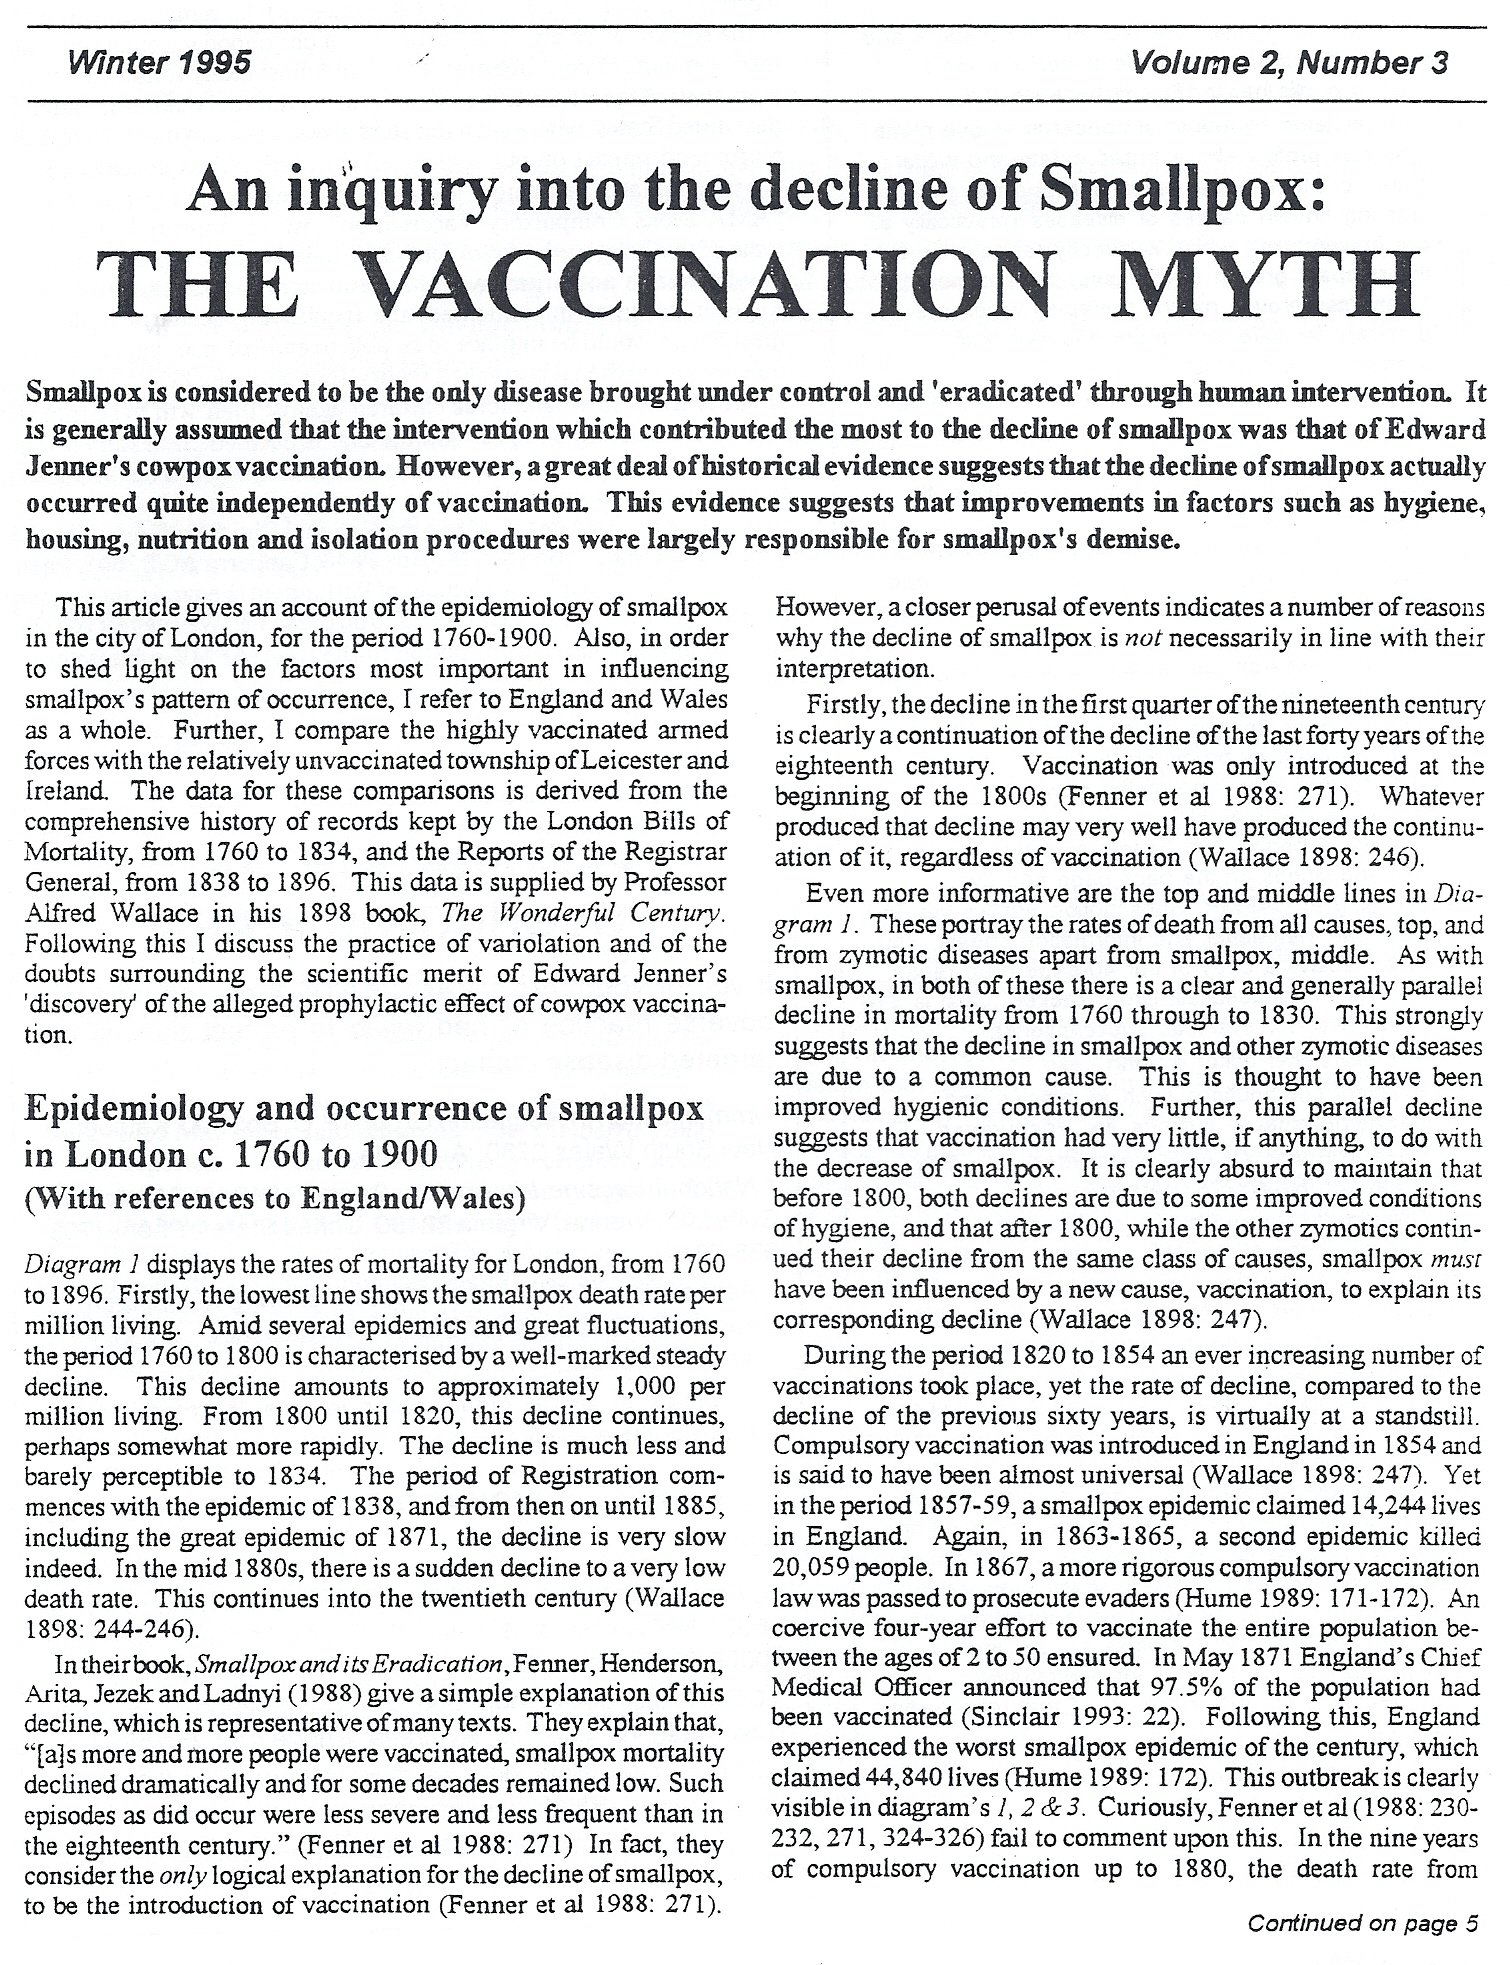 Decline-of-Smallpox-UK-Vaccination-Myth-p01a